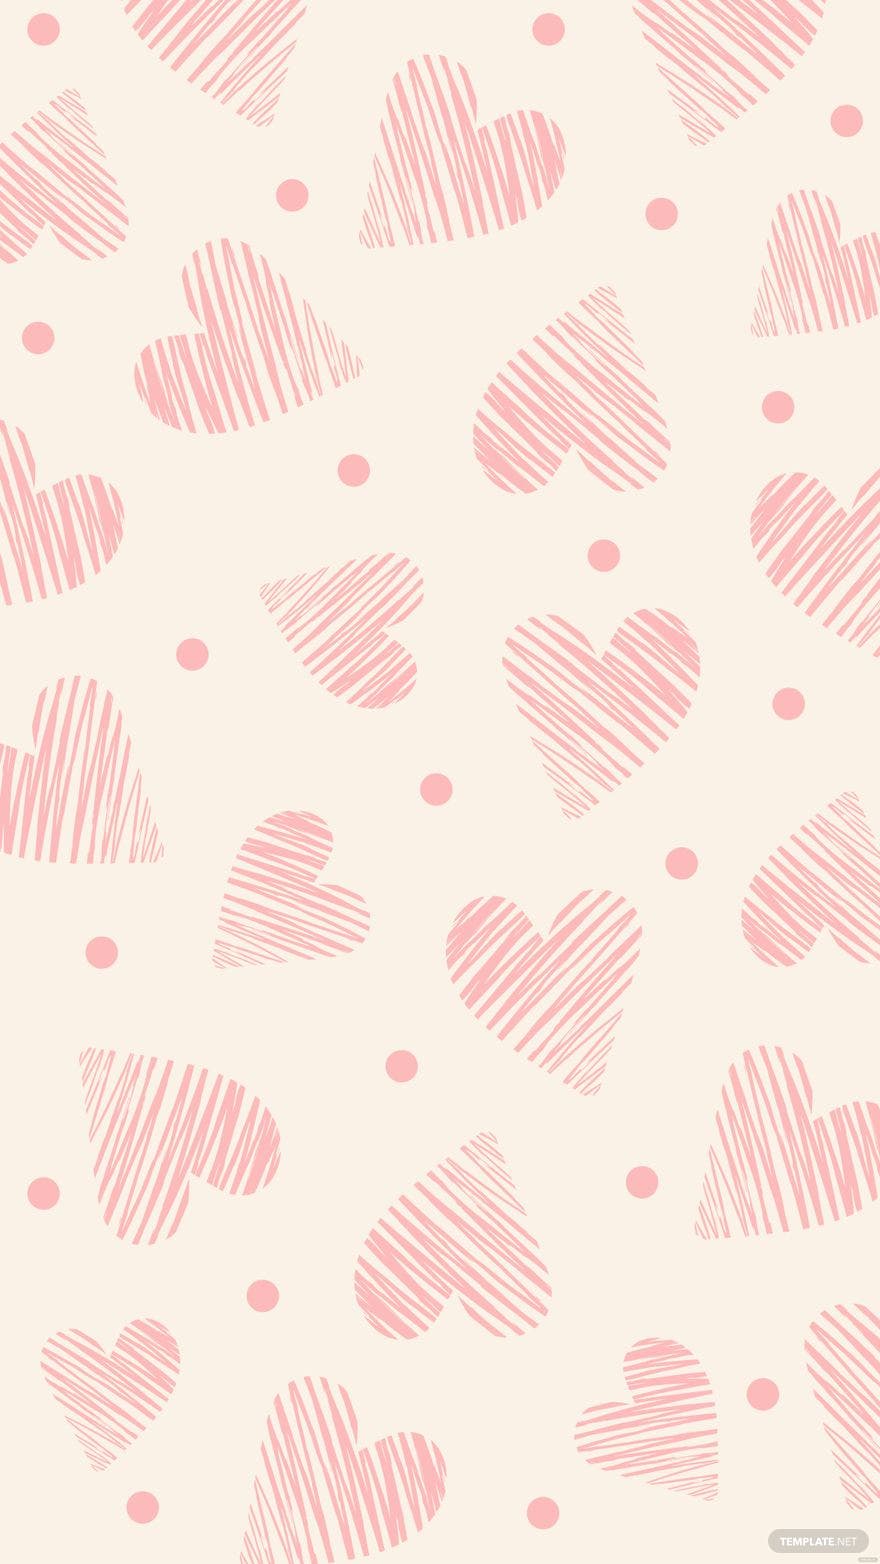 Free Light Pink Heart Background, Illustrator, JPG, SVG